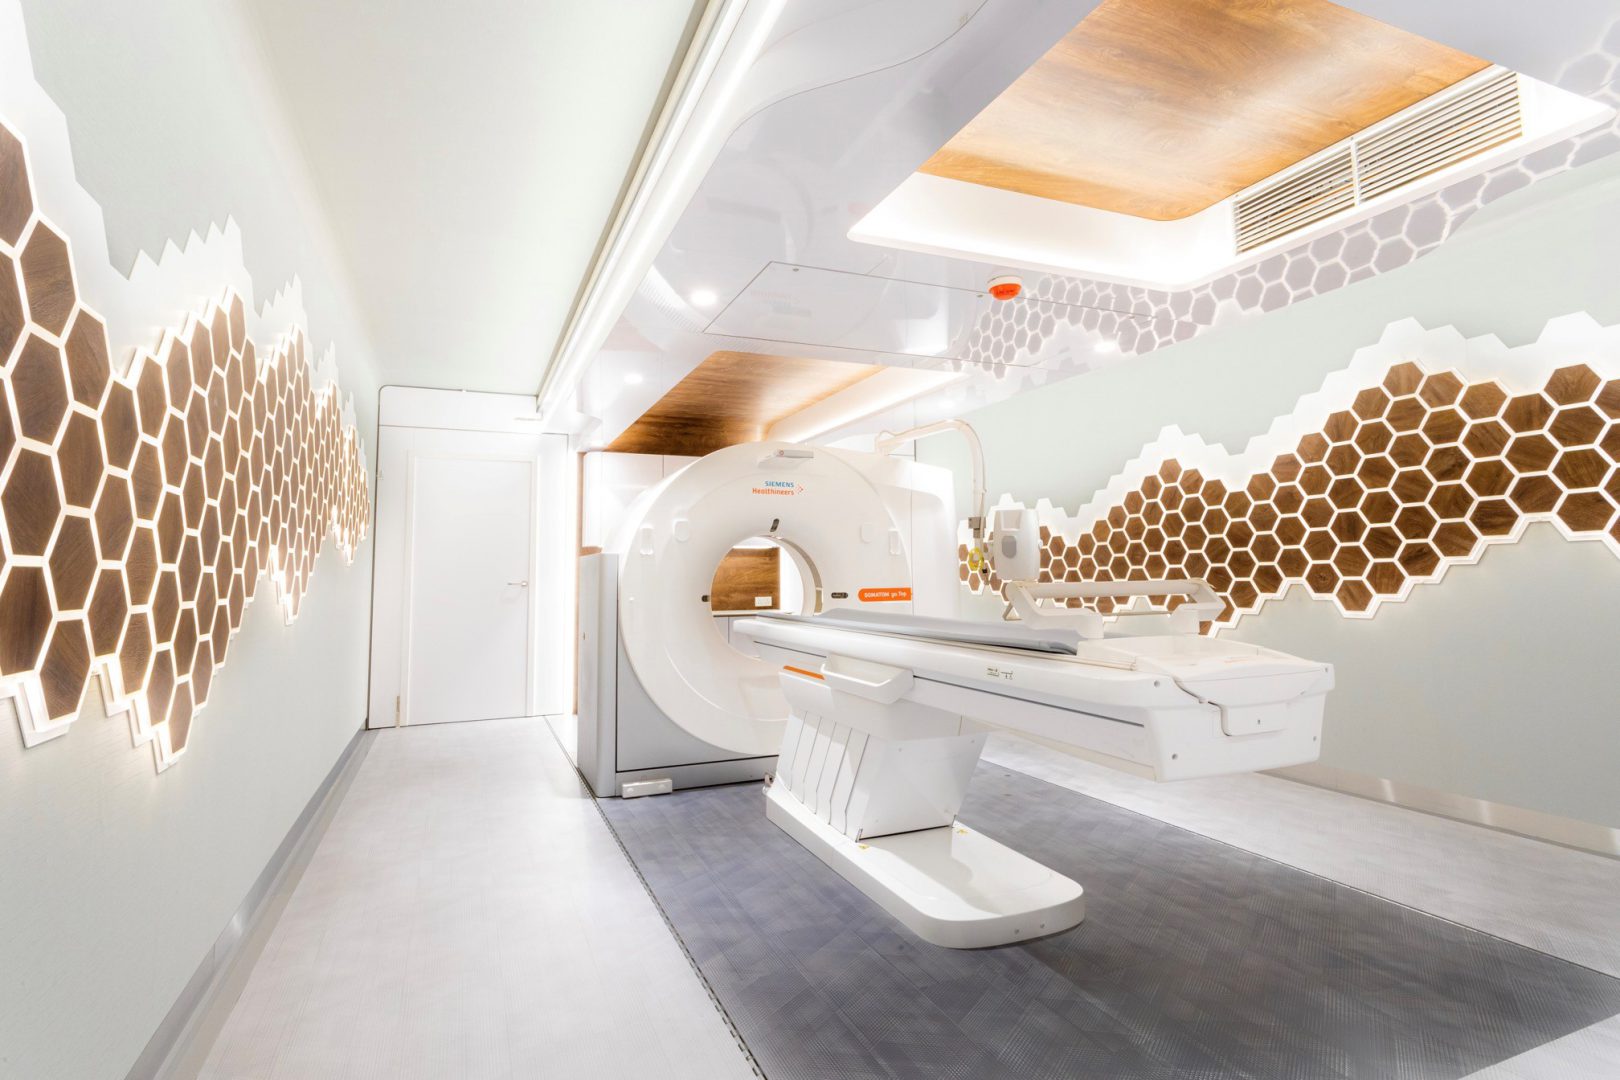 Mobiele-CT-scan-unit-cleanroom-zorg-interieur-container-ZIJLSTRA-SCHIPPER-architecten-architectenbureau-noord-holland-architect-002